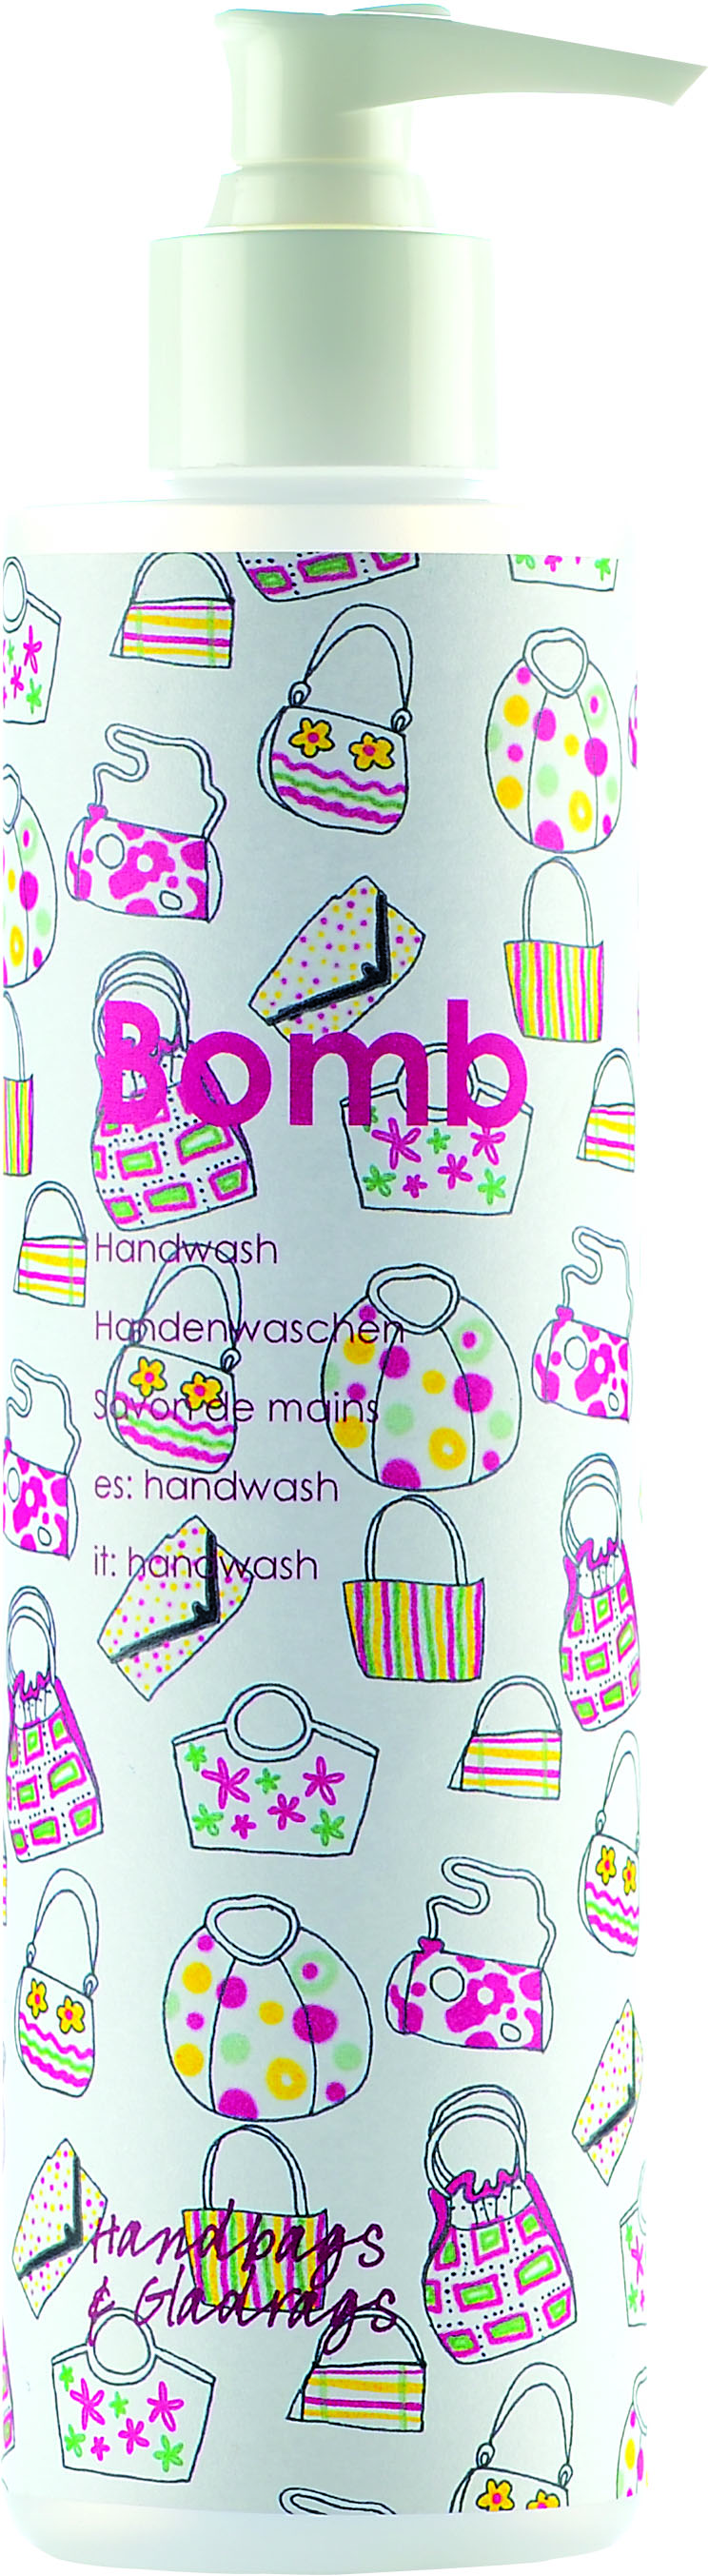 bomb_handbags and gladrags handwash.jpg